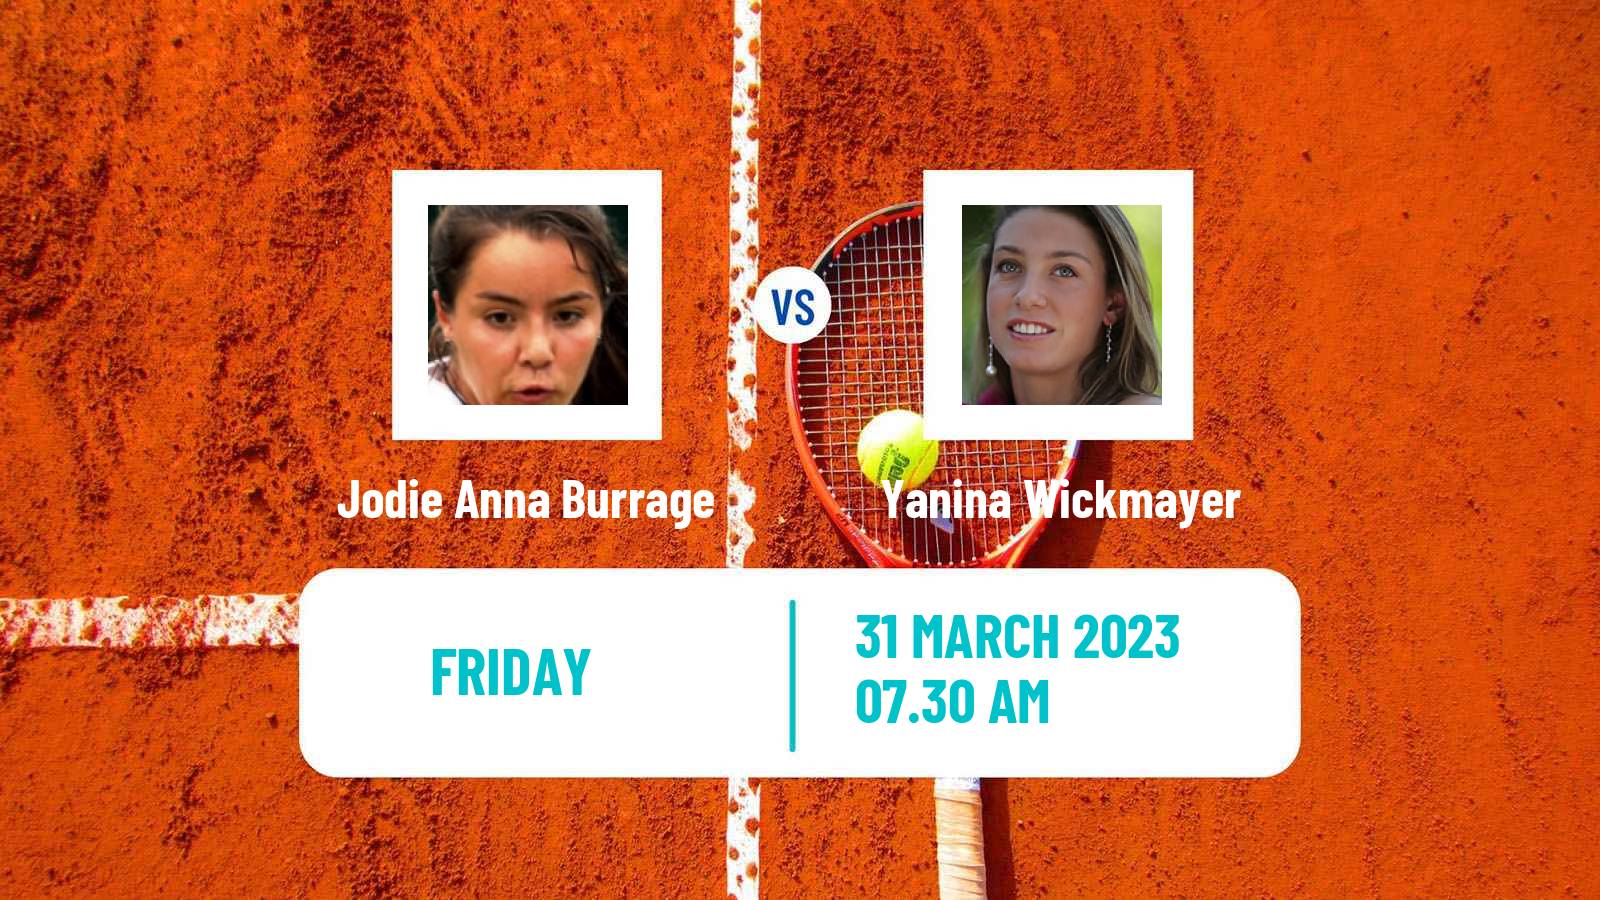 Tennis ITF Tournaments Jodie Anna Burrage - Yanina Wickmayer